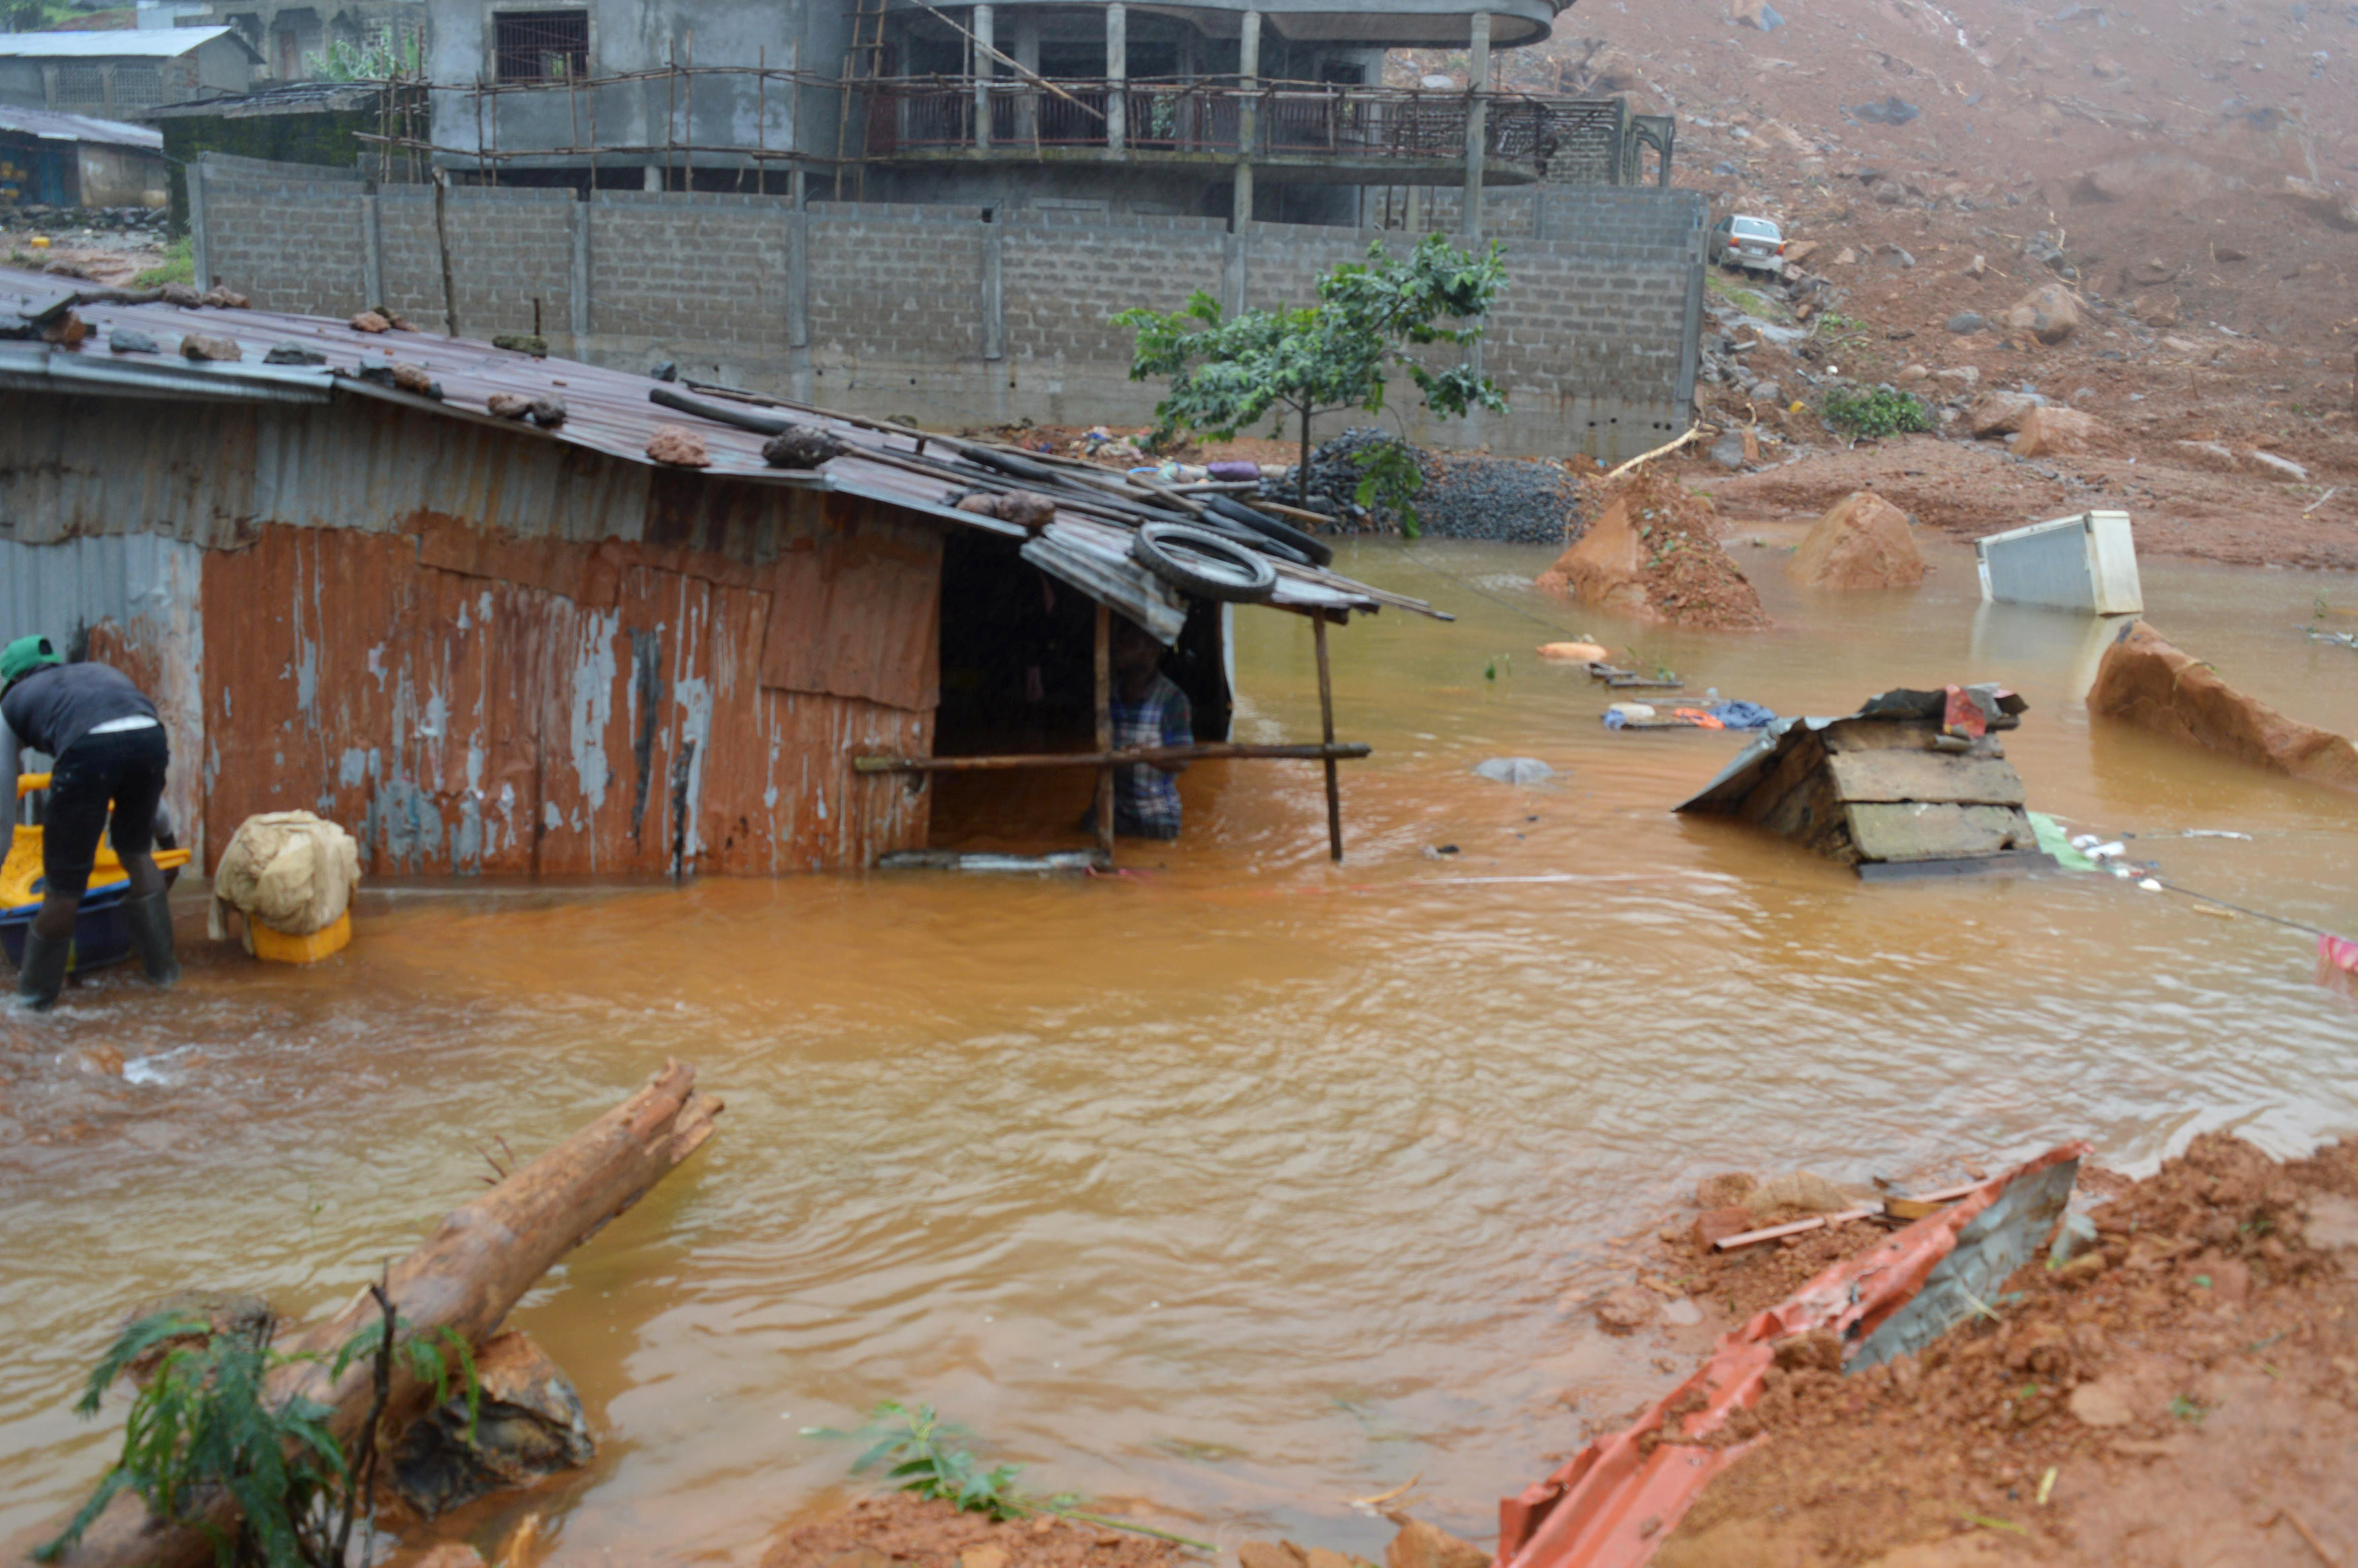 <p><span>Подтопленная деревня&nbsp;в Сьерра-Леоне</span></p>
<p><span>Фото: &copy; REUTERS/Ernest Henry</span></p>